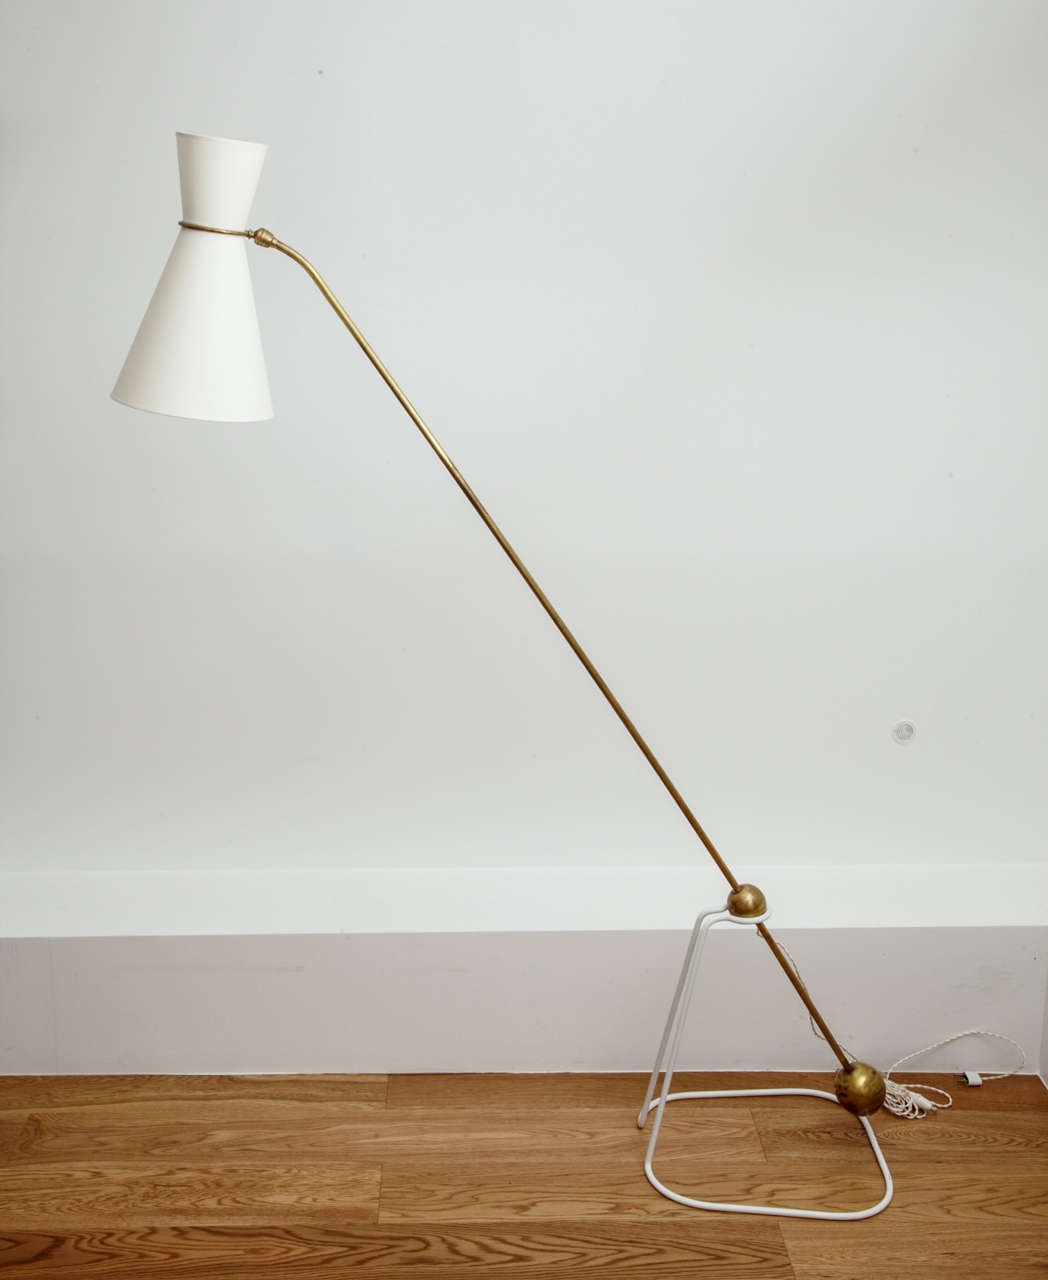 Floor lamp model G2 by Pierre Guariche (1926-1995)
Pierre Disderot Edition
Rare white lacquered model